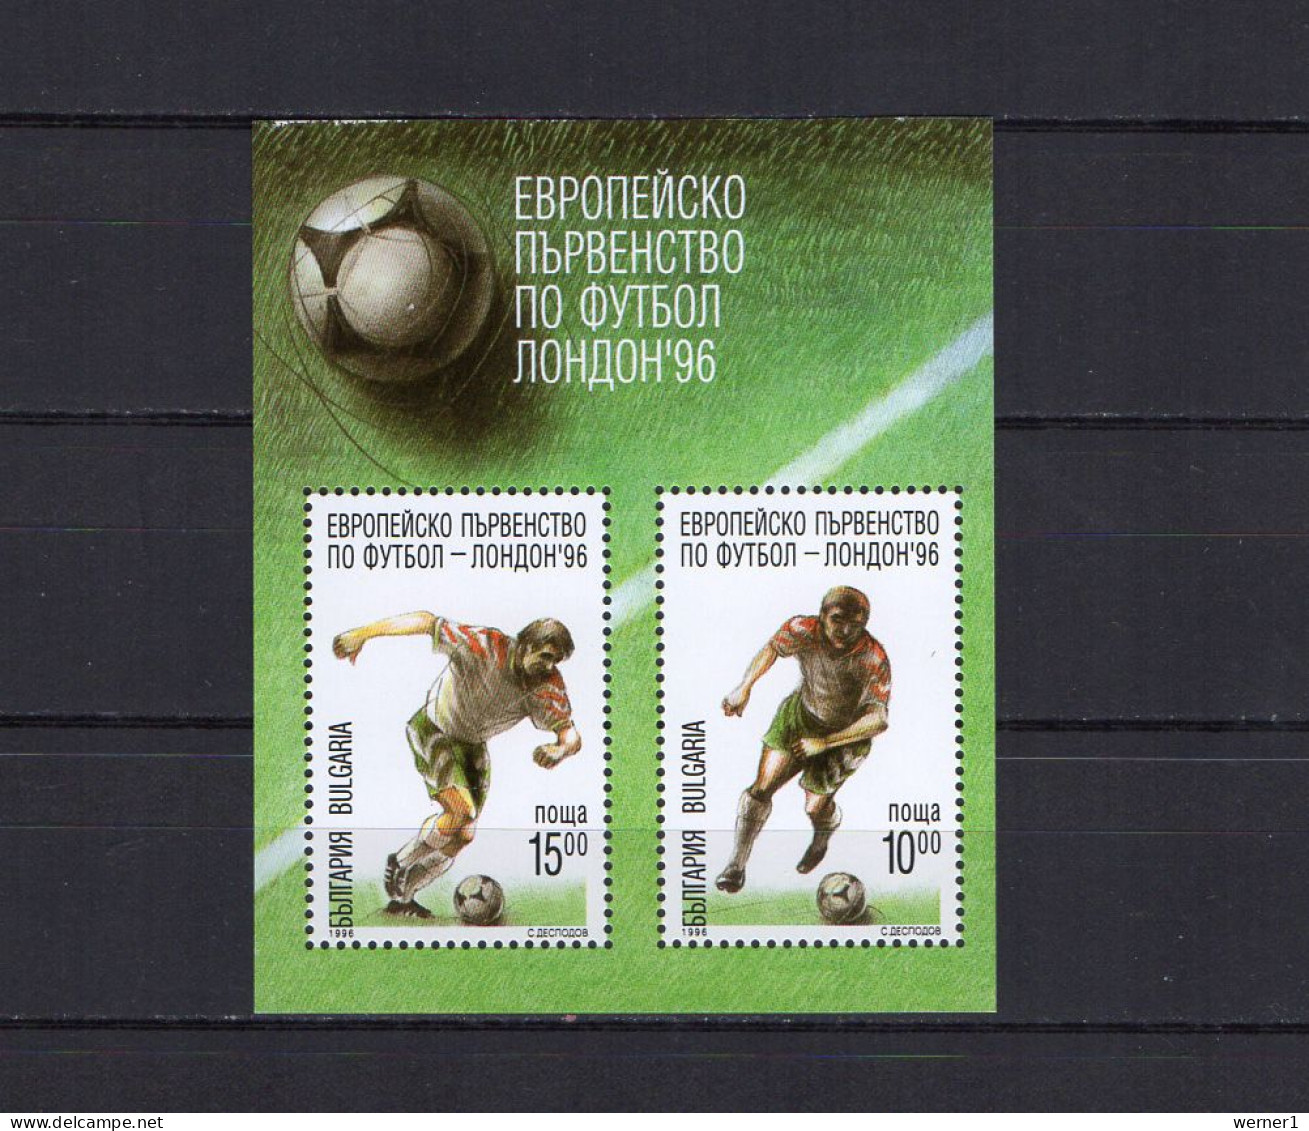 Bulgaria 1996 Football Soccer European Championship S/s MNH - Championnat D'Europe (UEFA)